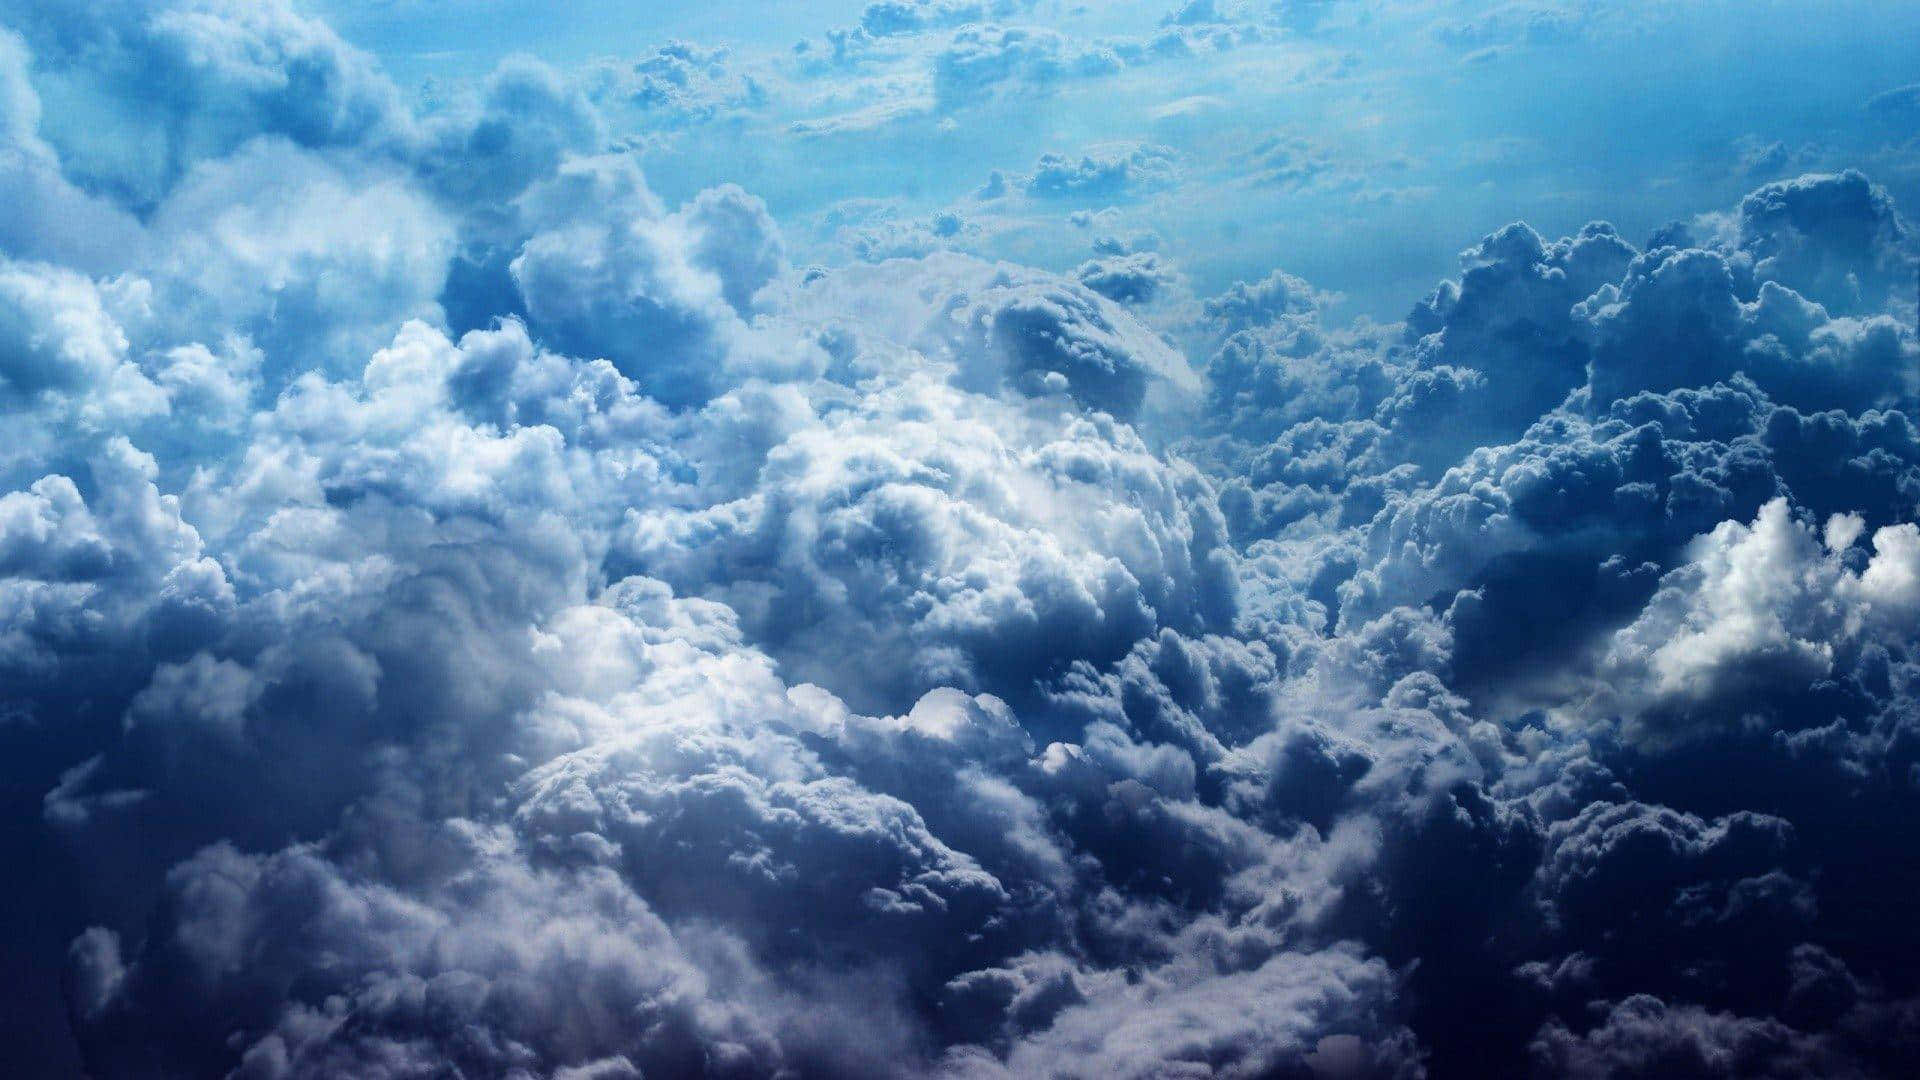 "Beautiful Aesthetic Cloud Background"